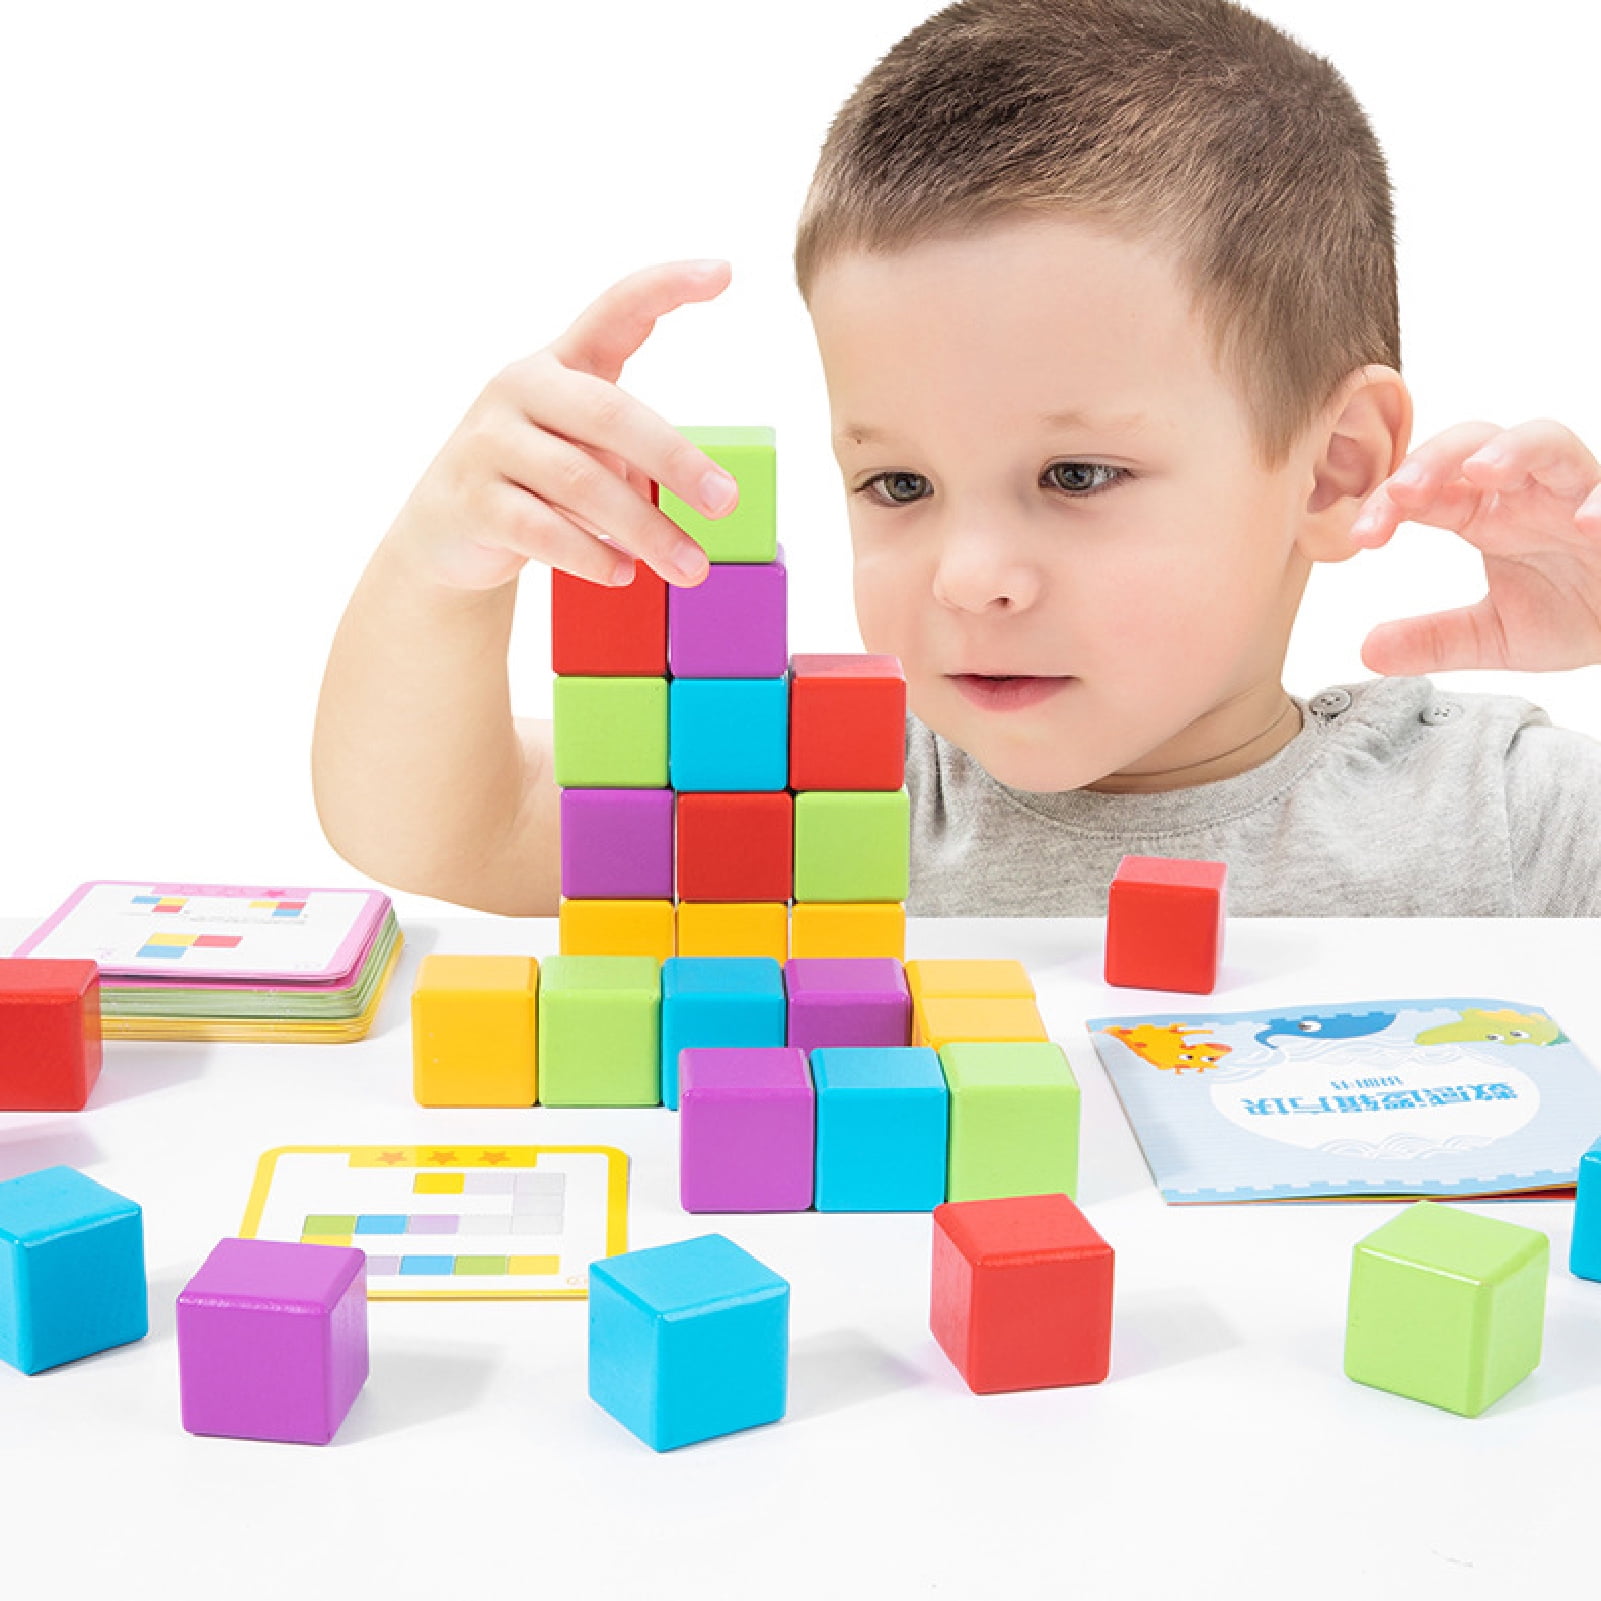 Details about   30 pcs Big Kids Educational Building Blocks Bricks Play Toy Gift Construction 3+ 